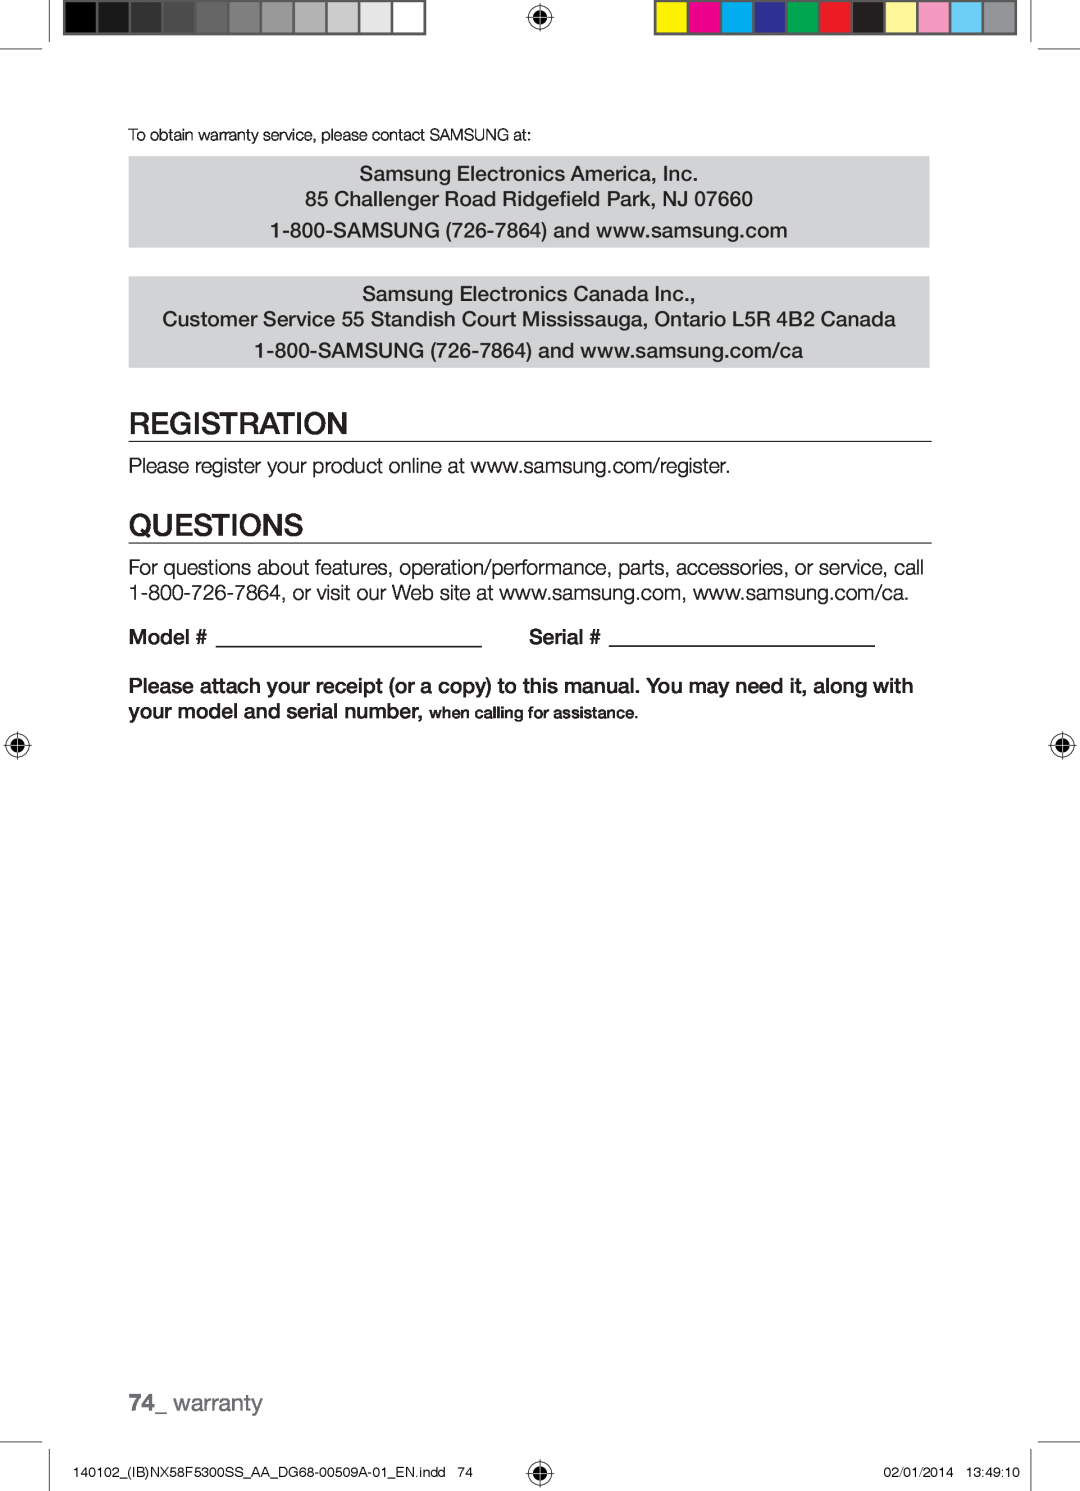 Samsung NX58F5500SW user manual Registration, Questions, warranty 